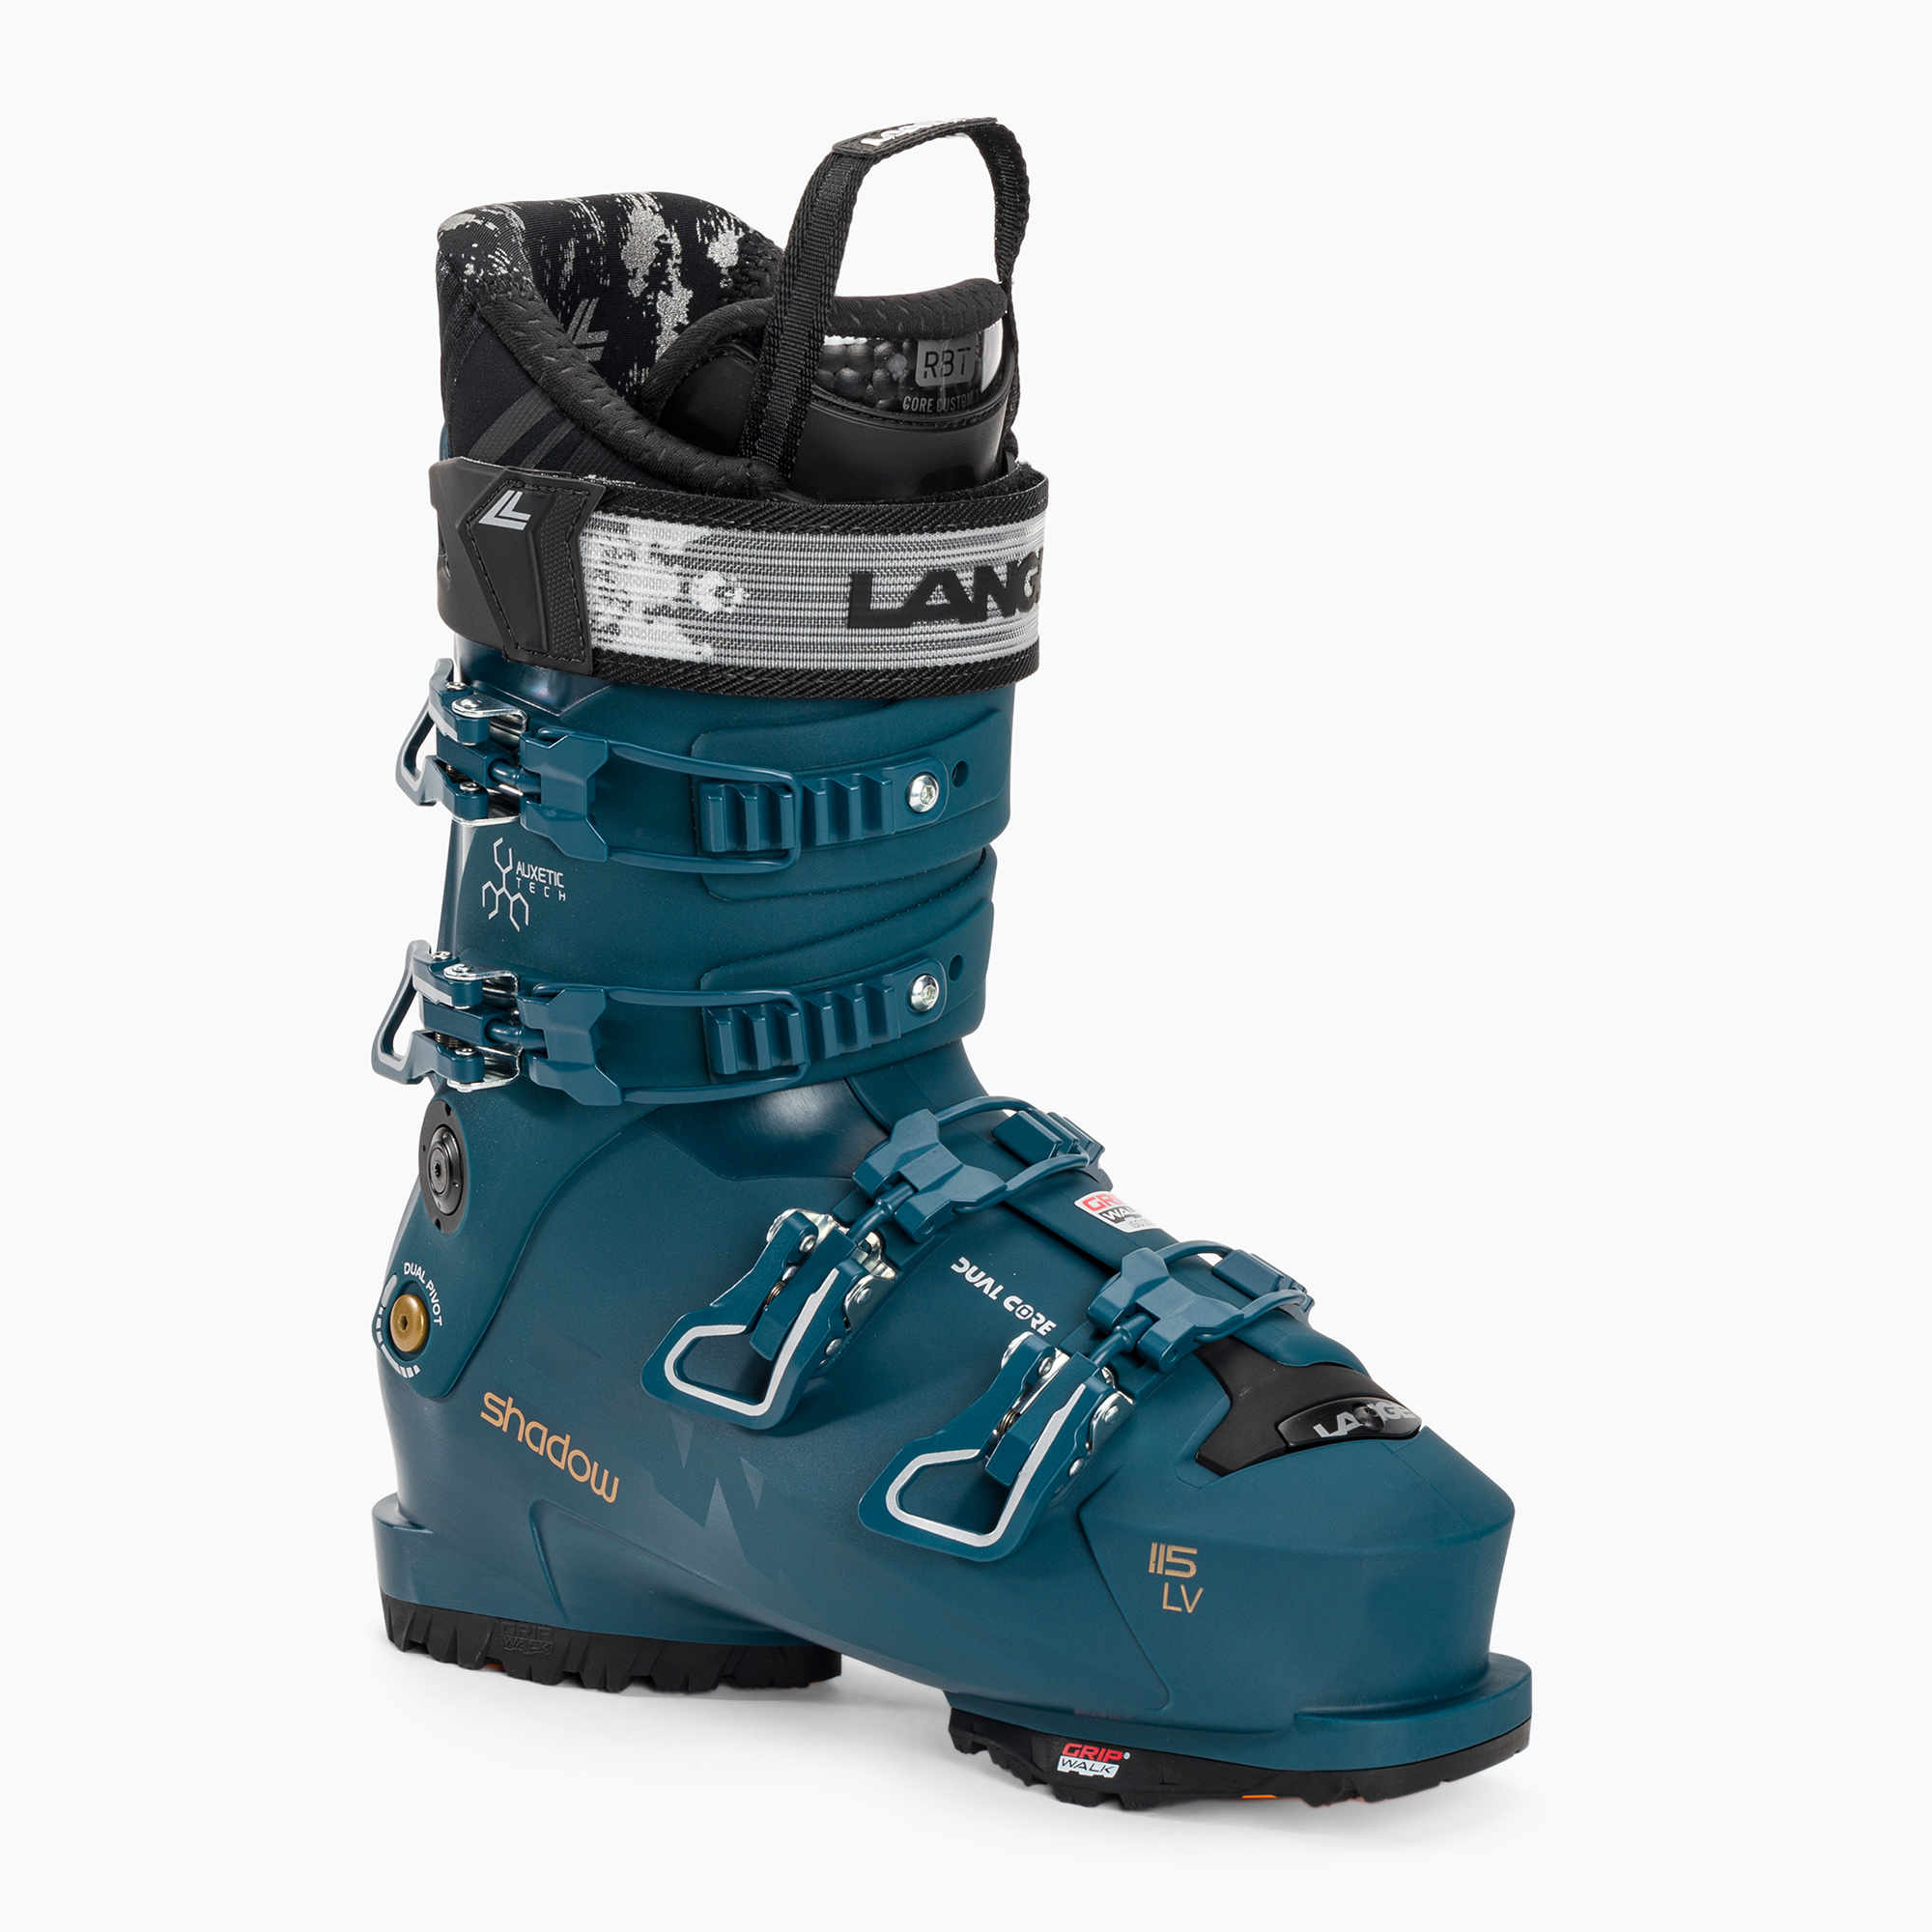 Дамски ски обувки Lange Shadow 115 W LV GW interstellar